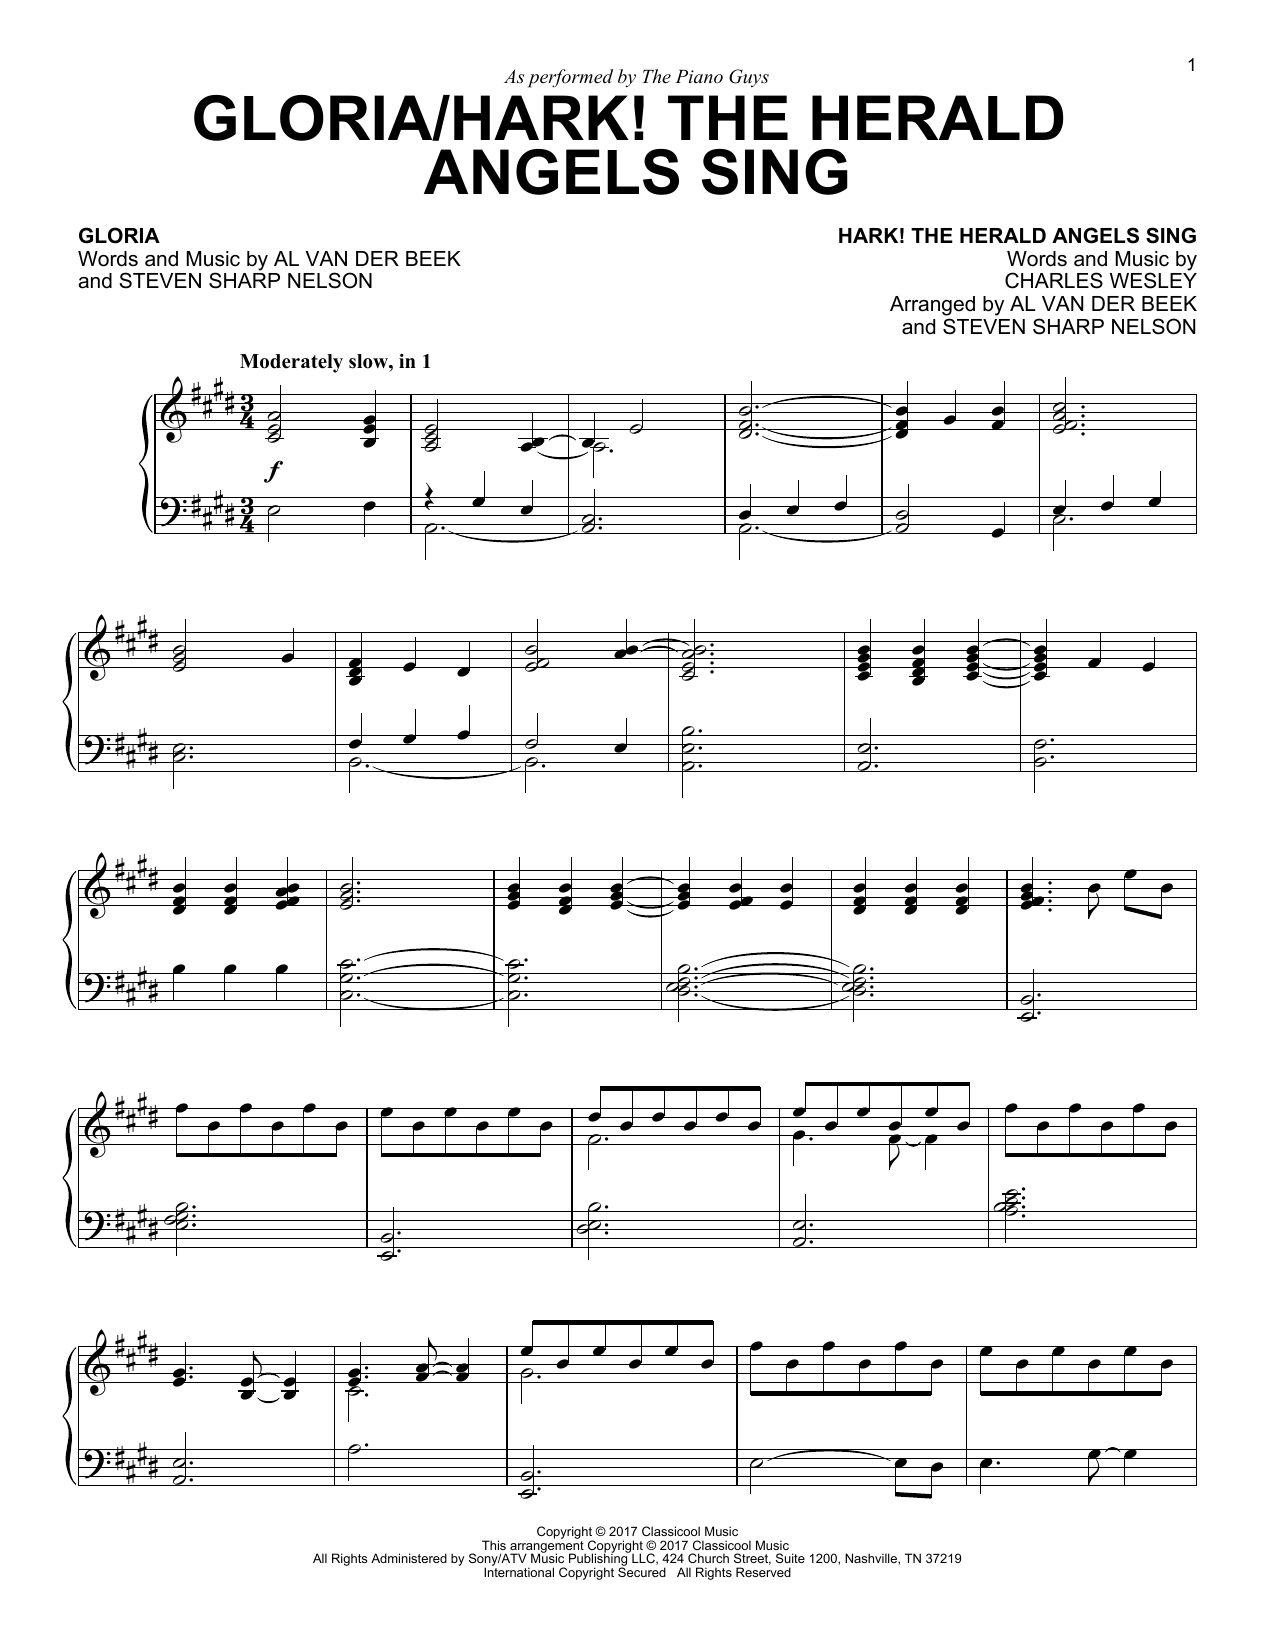 Download The Piano Guys Gloria/Hark! The Herald Angels Sing Sheet Music